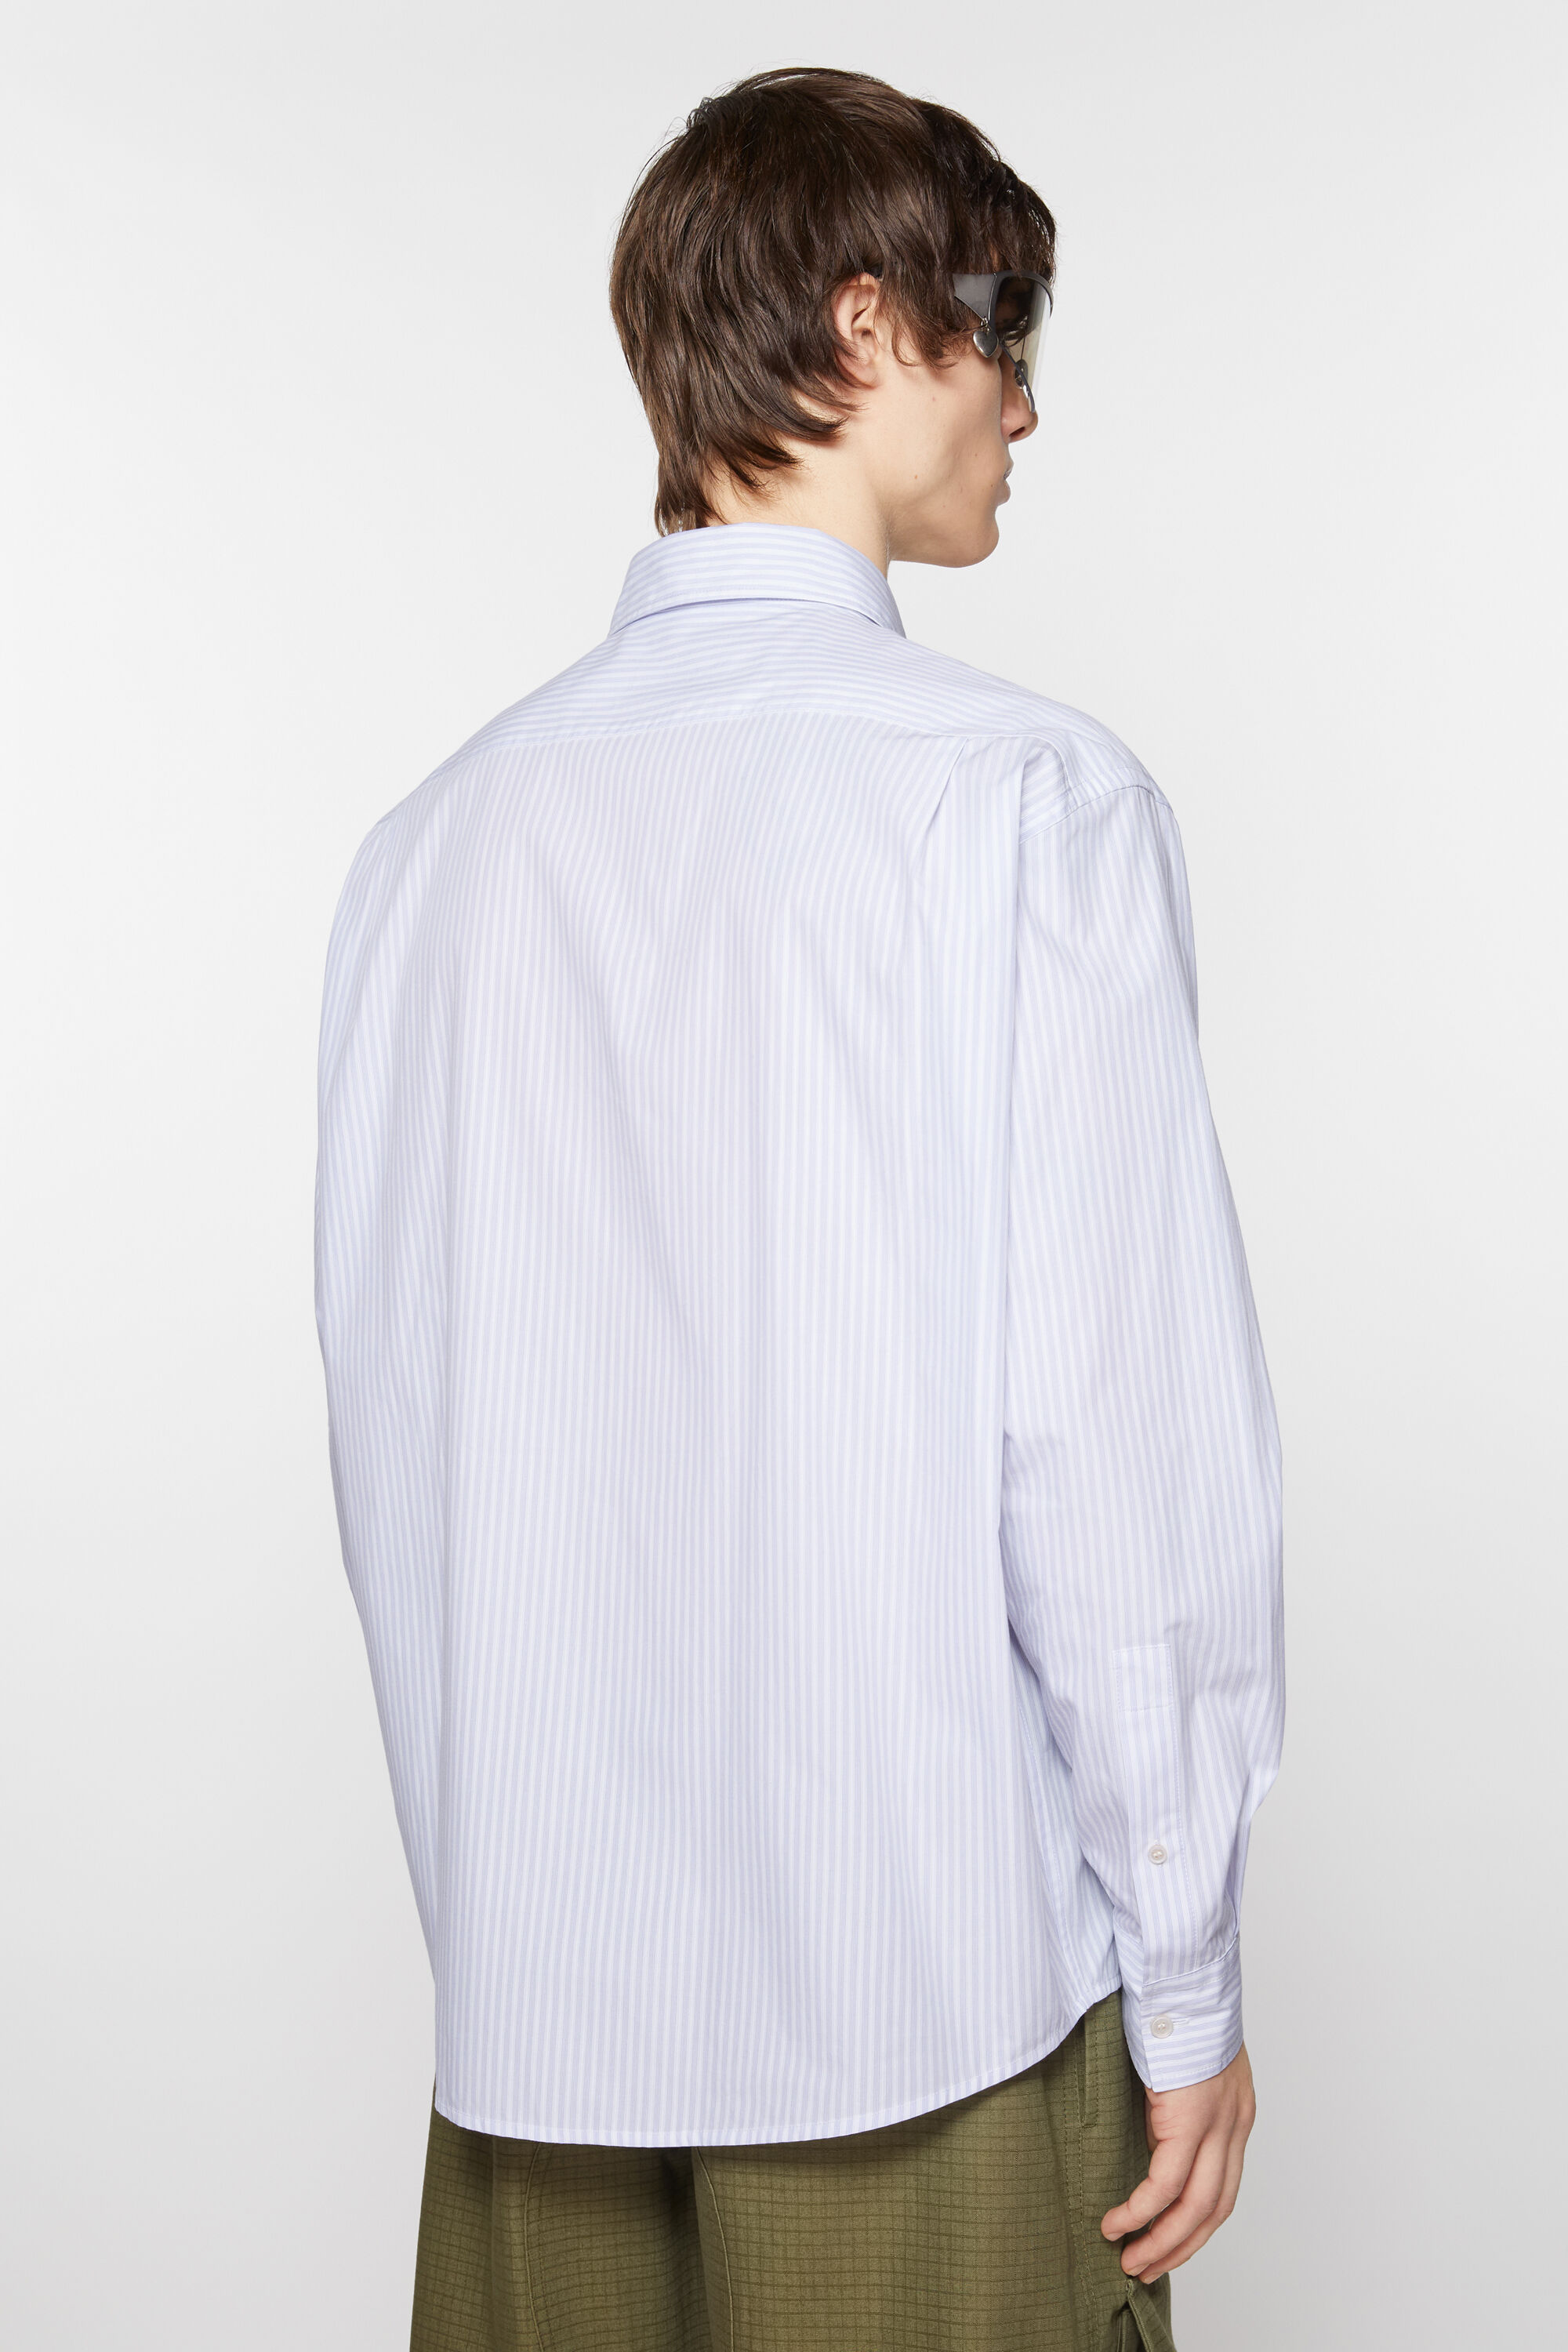 Acne Studios - Button-up shirt - Lilac/white